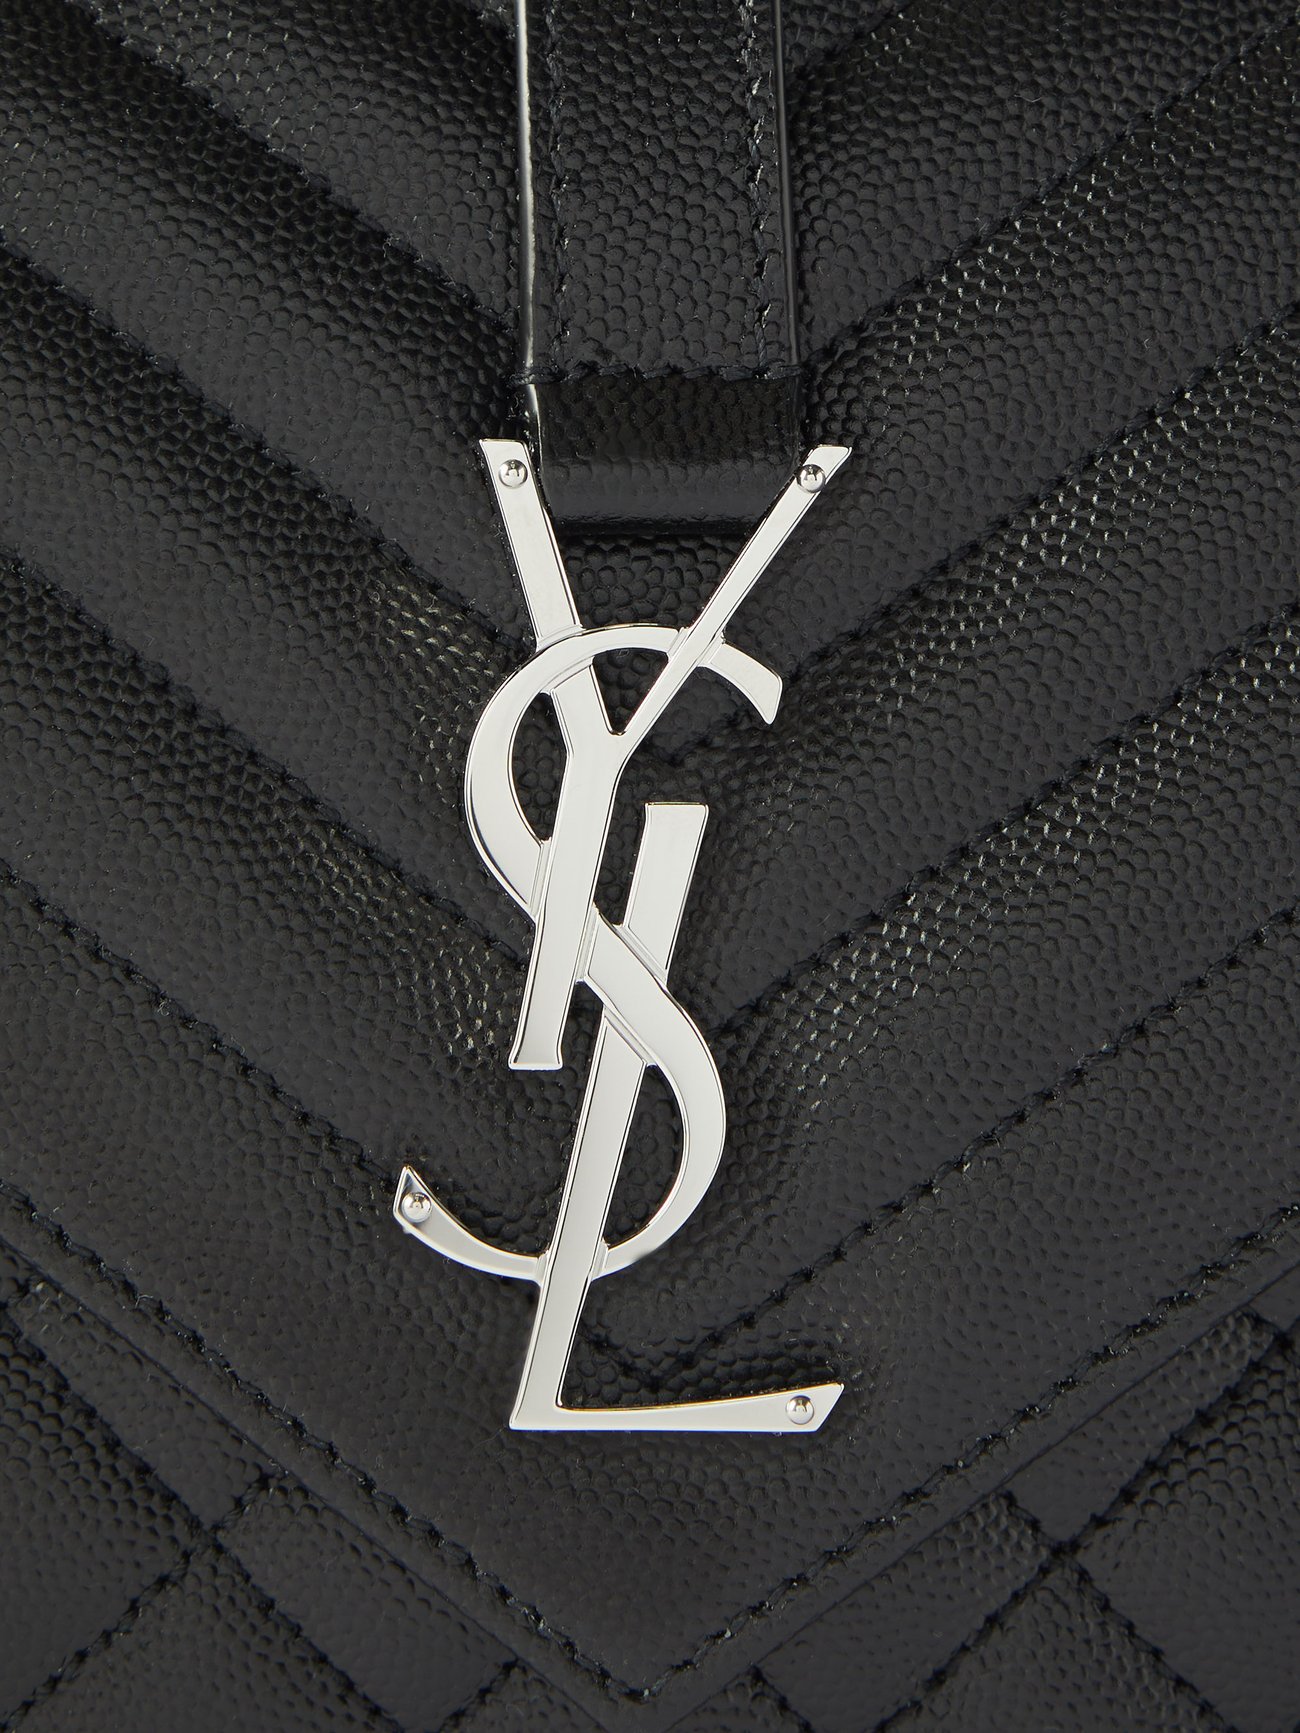 Saint Laurent - College Medium Quilted Textured-leather Shoulder Bag - Black